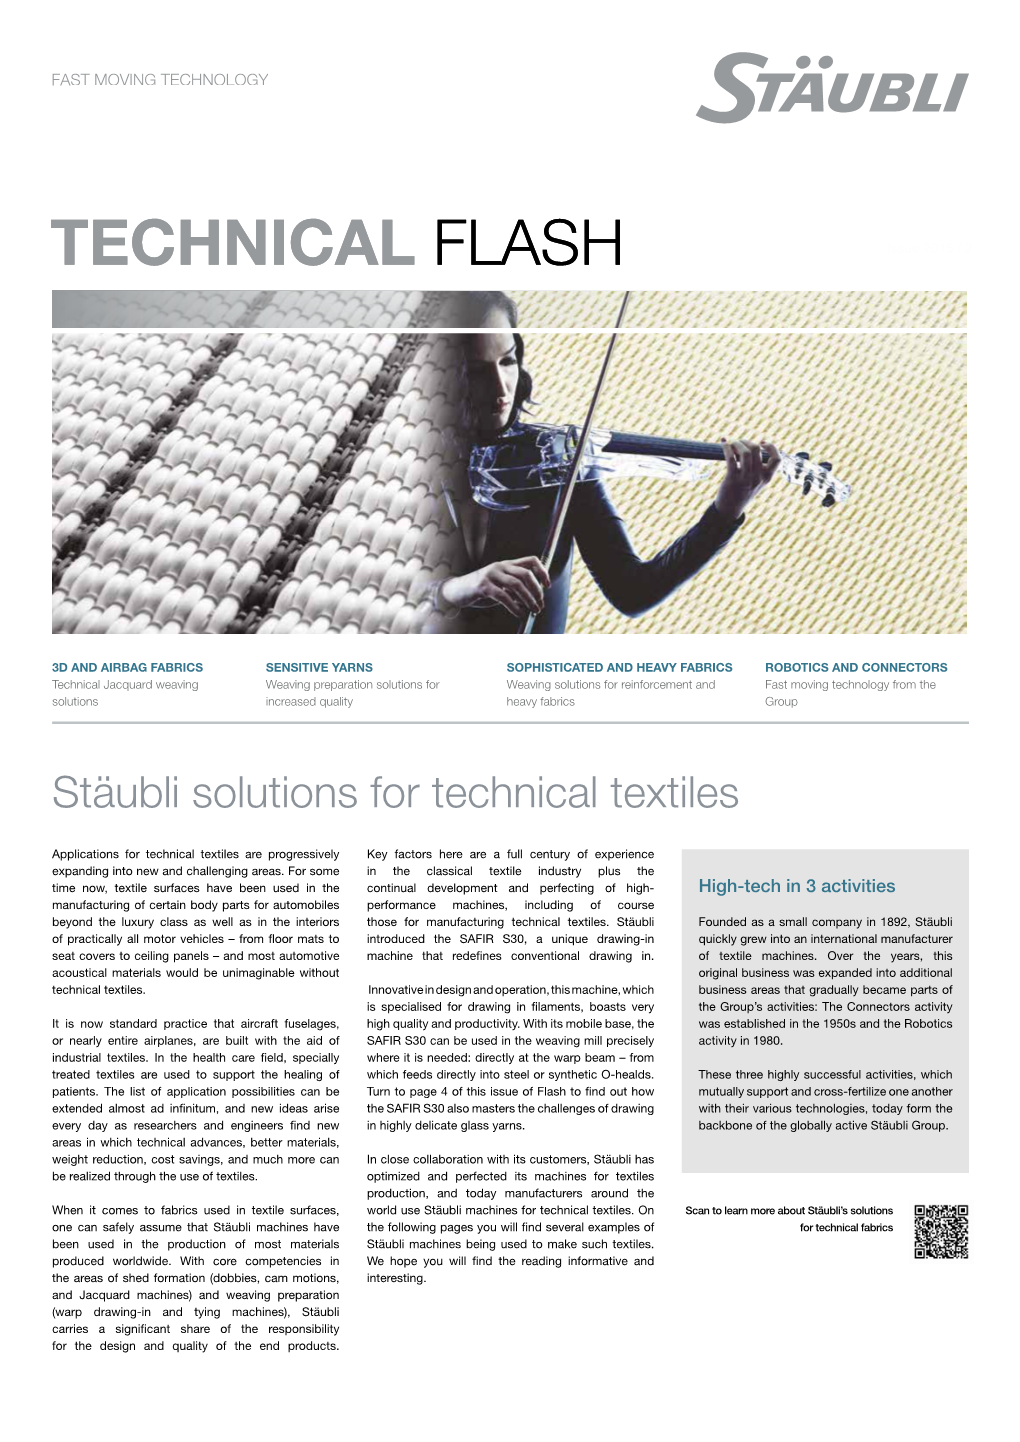 Staubli Technical Textile Flash 2019